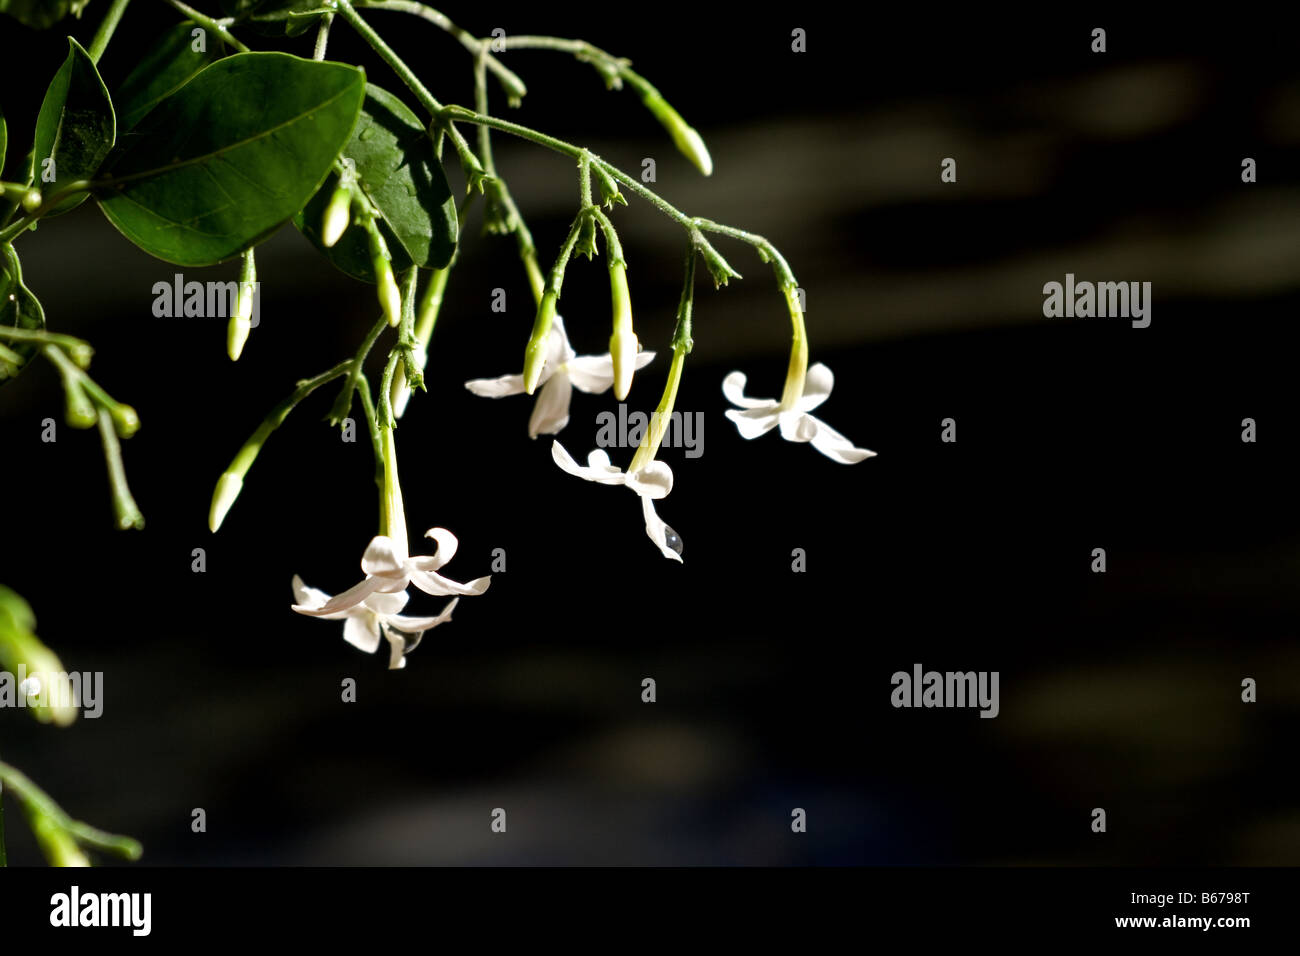 Jasmine flowers on black background Stock Photo